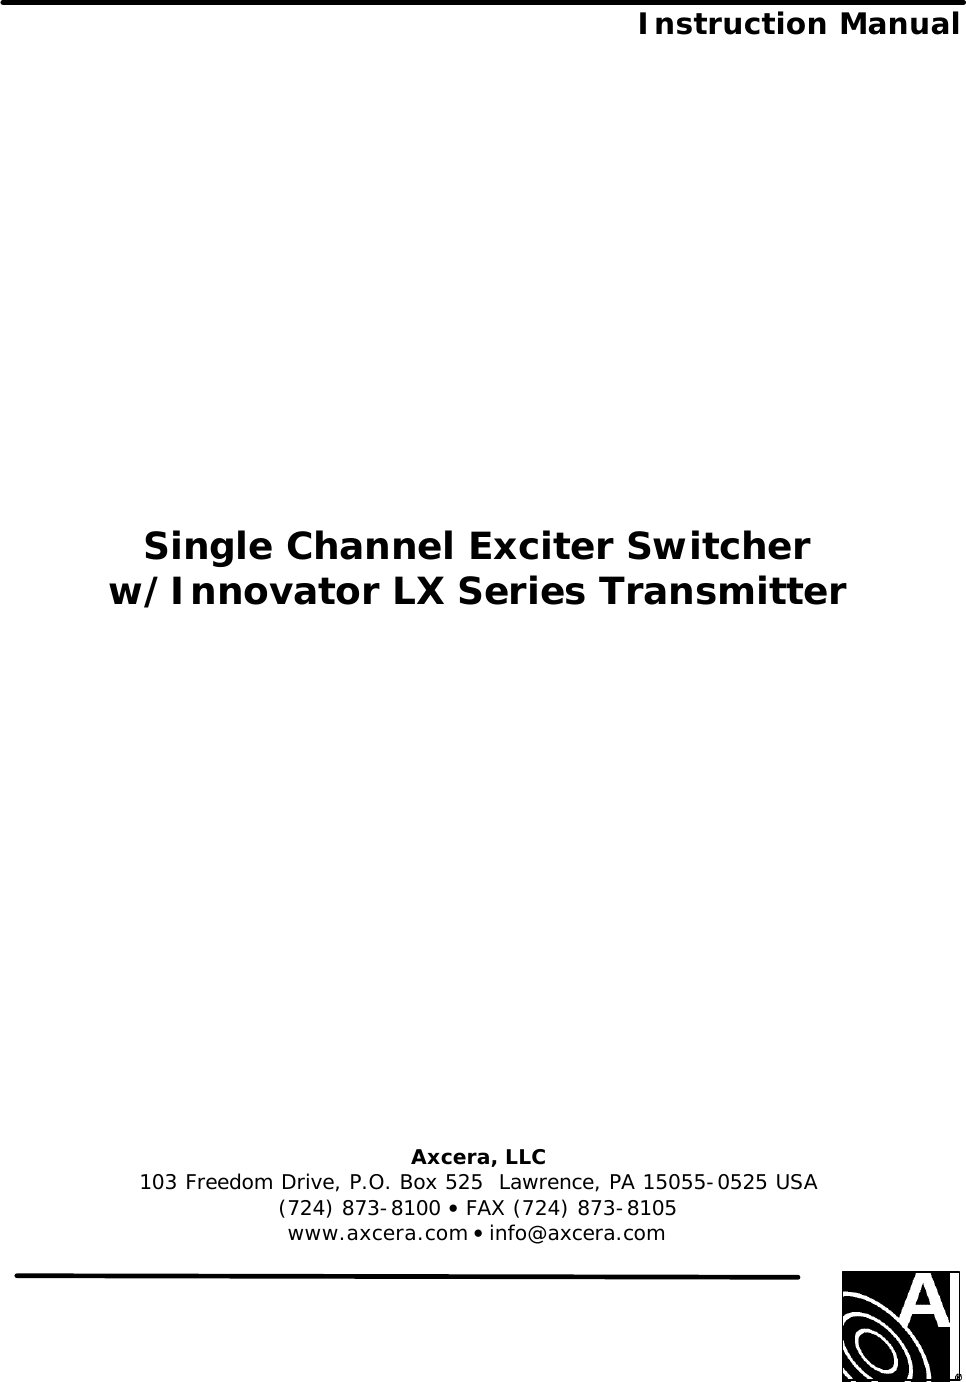  Instruction Manual                     Single Channel Exciter Switcher w/Innovator LX Series Transmitter                  Axcera, LLC  103 Freedom Drive, P.O. Box 525  Lawrence, PA 15055-0525 USA (724) 873-8100 • FAX (724) 873-8105 www.axcera.com • info@axcera.com    